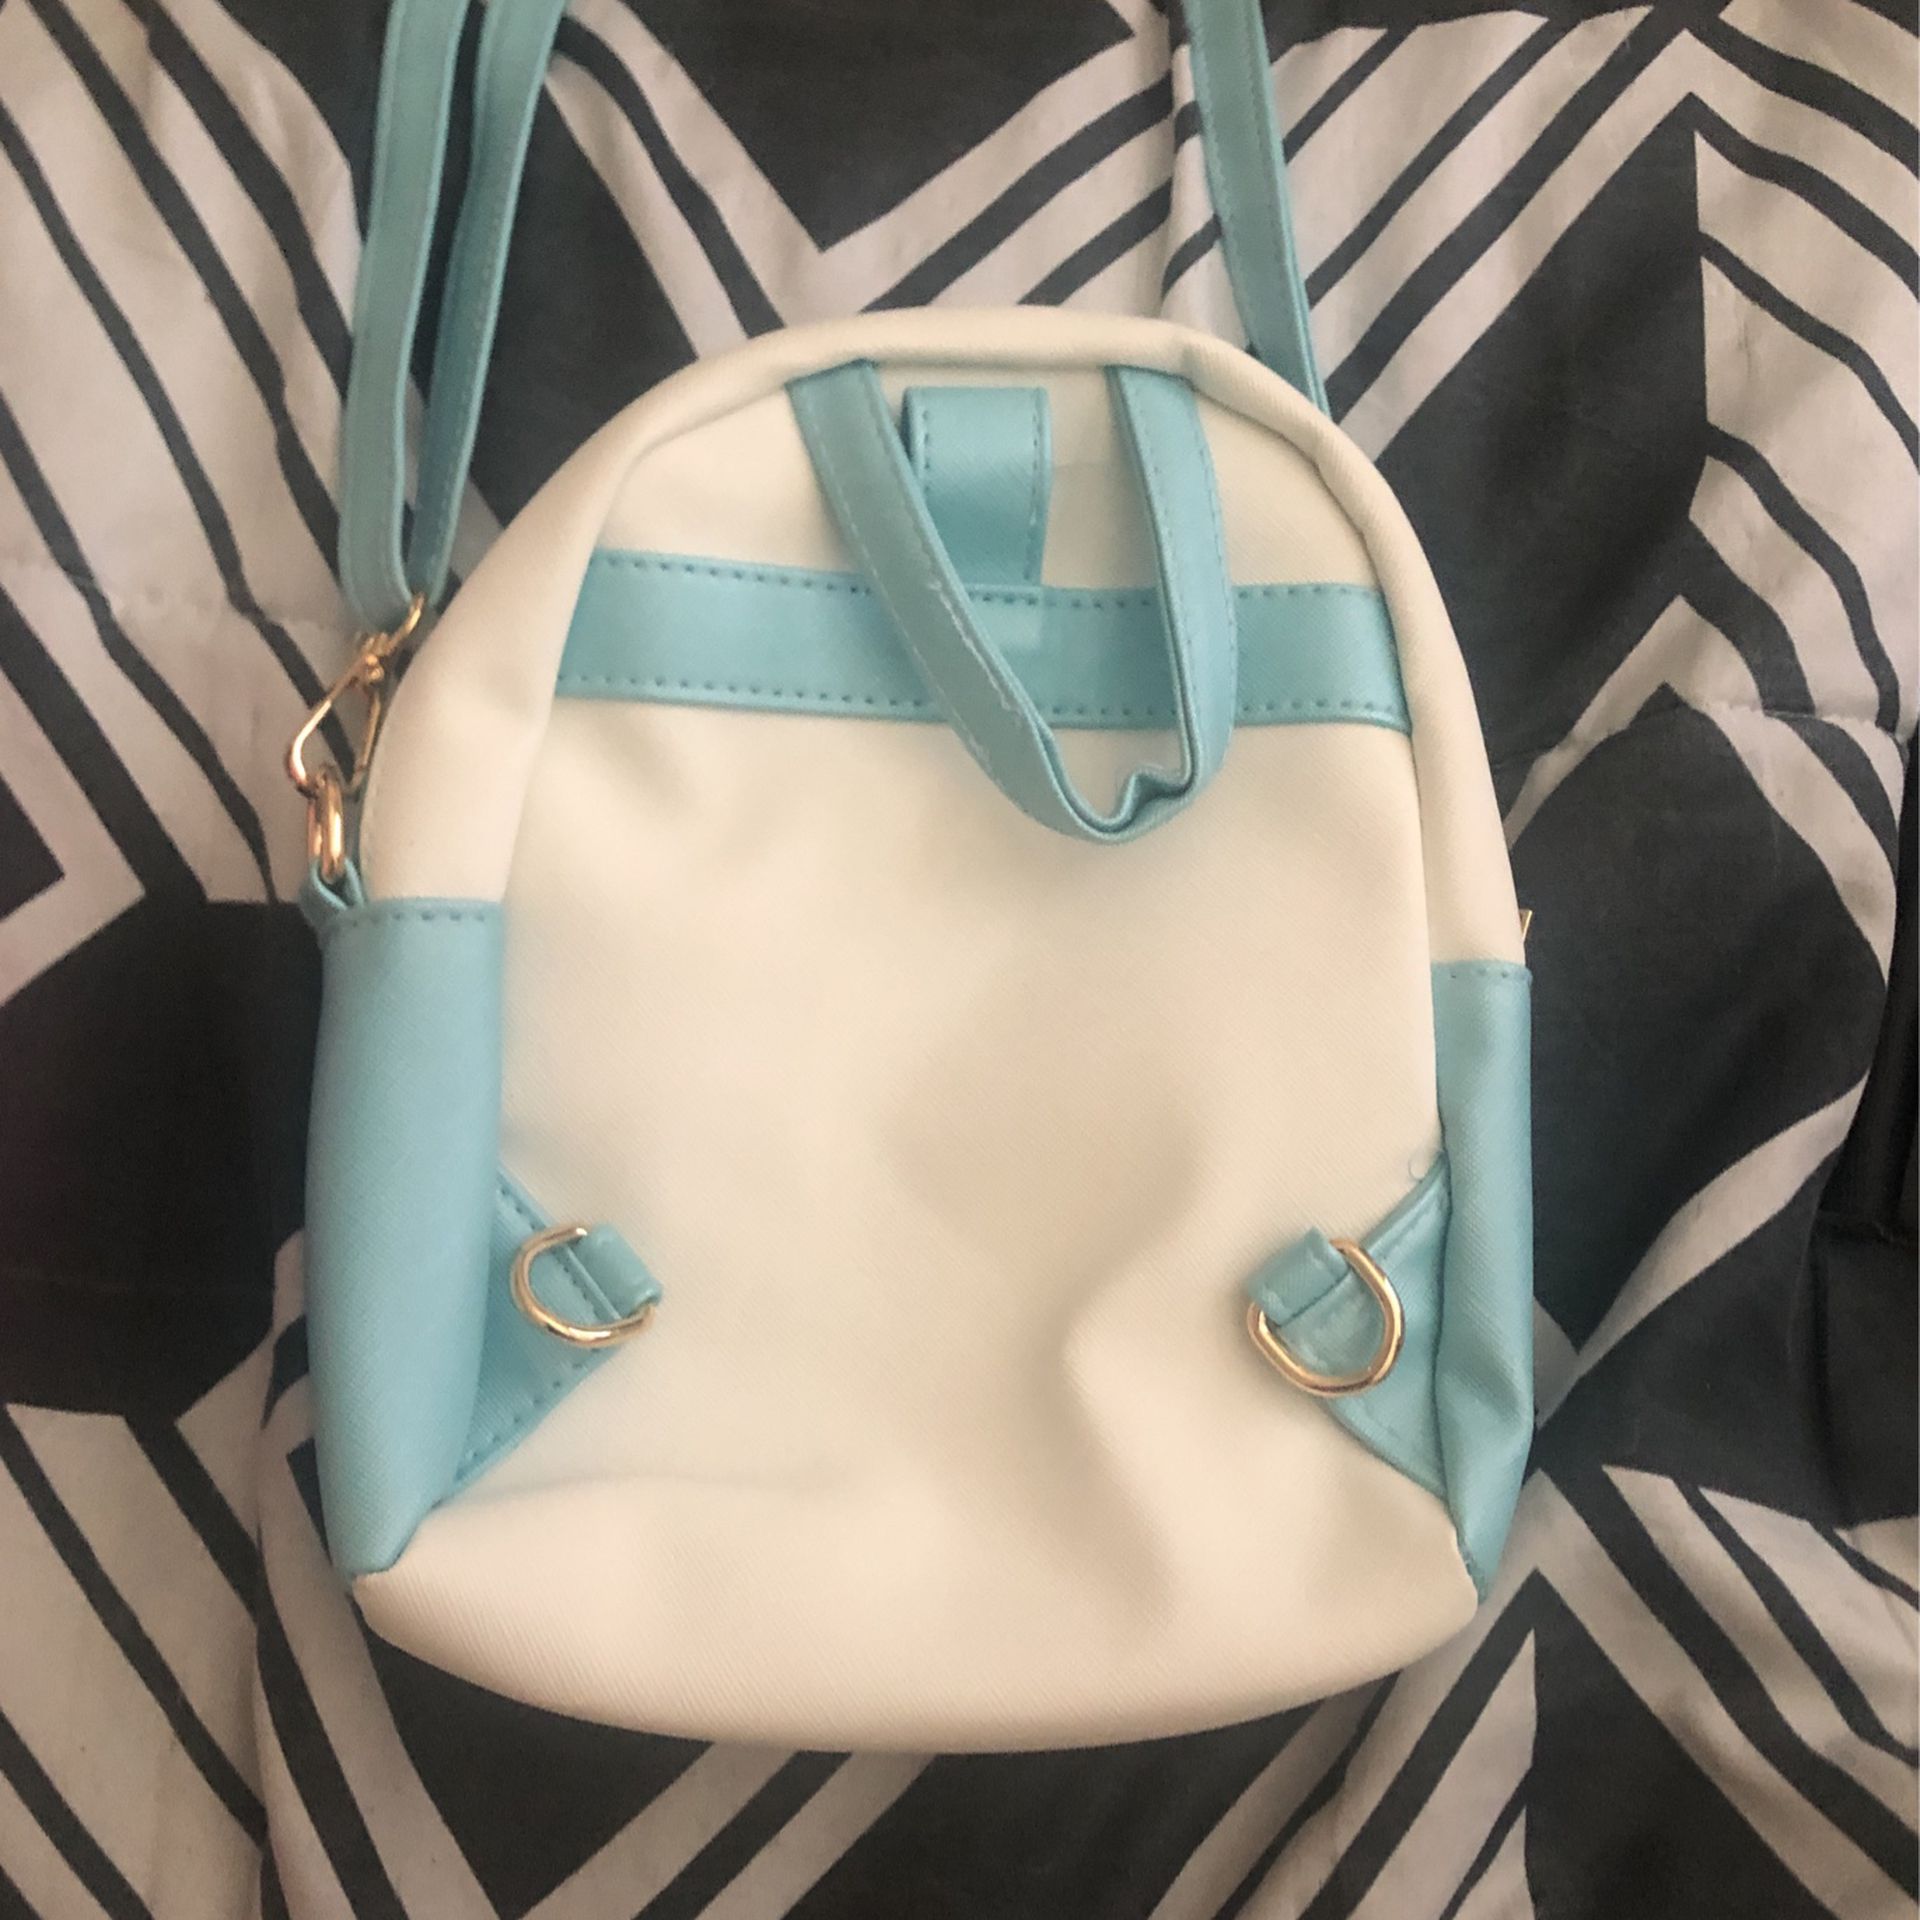  Cinnamon roll Backpack/purse